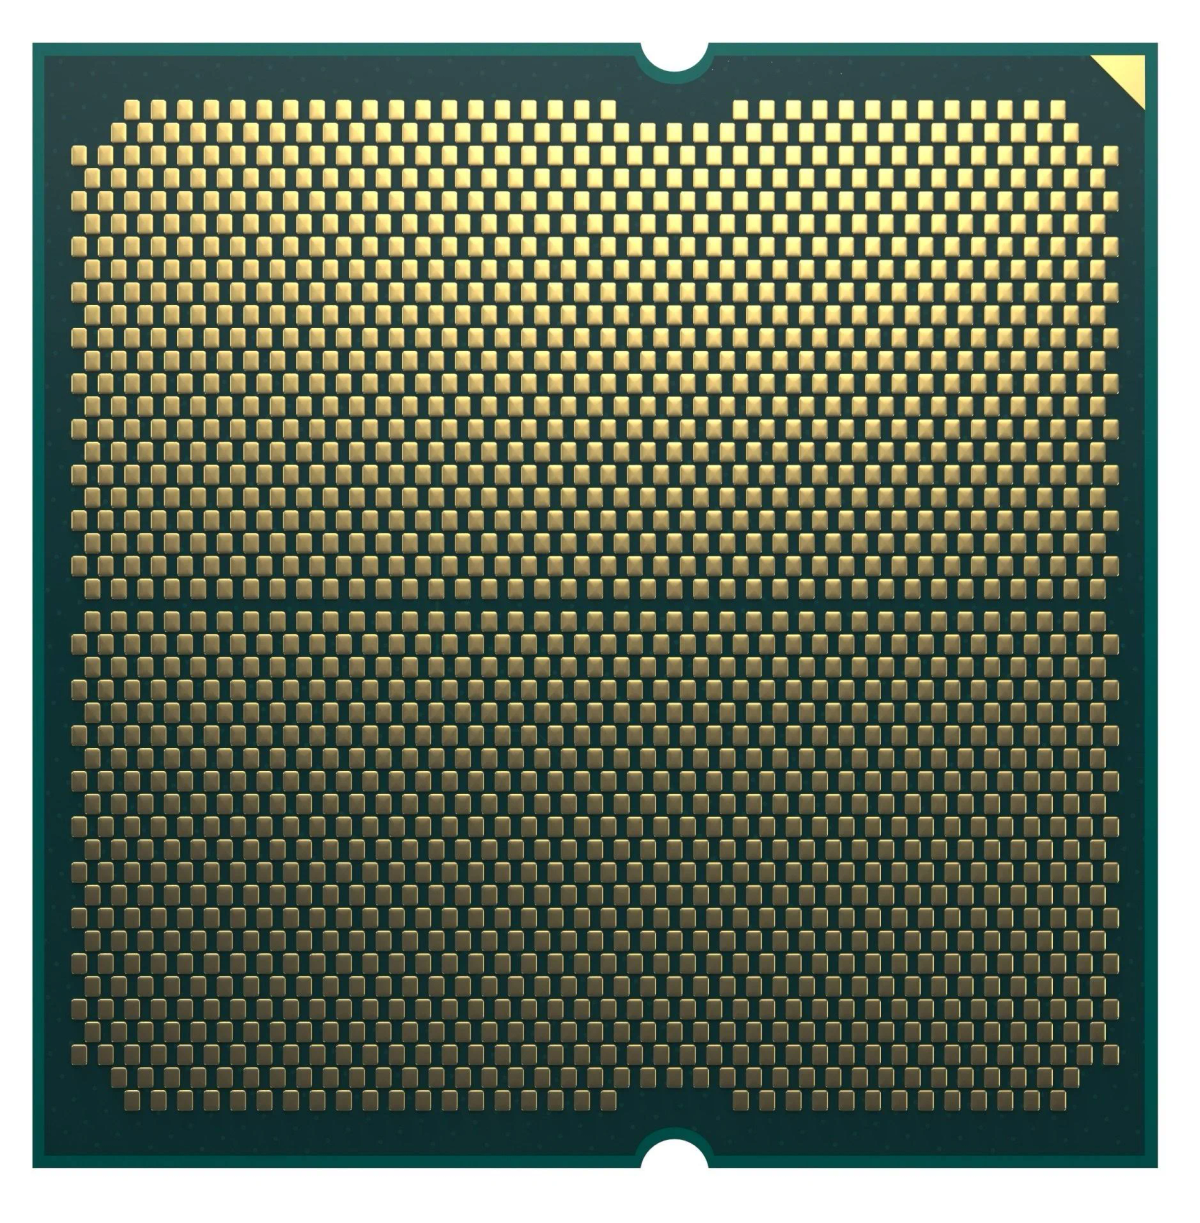 Prozessor, AMD 7950X 9 Ryzen Mehrfarbig